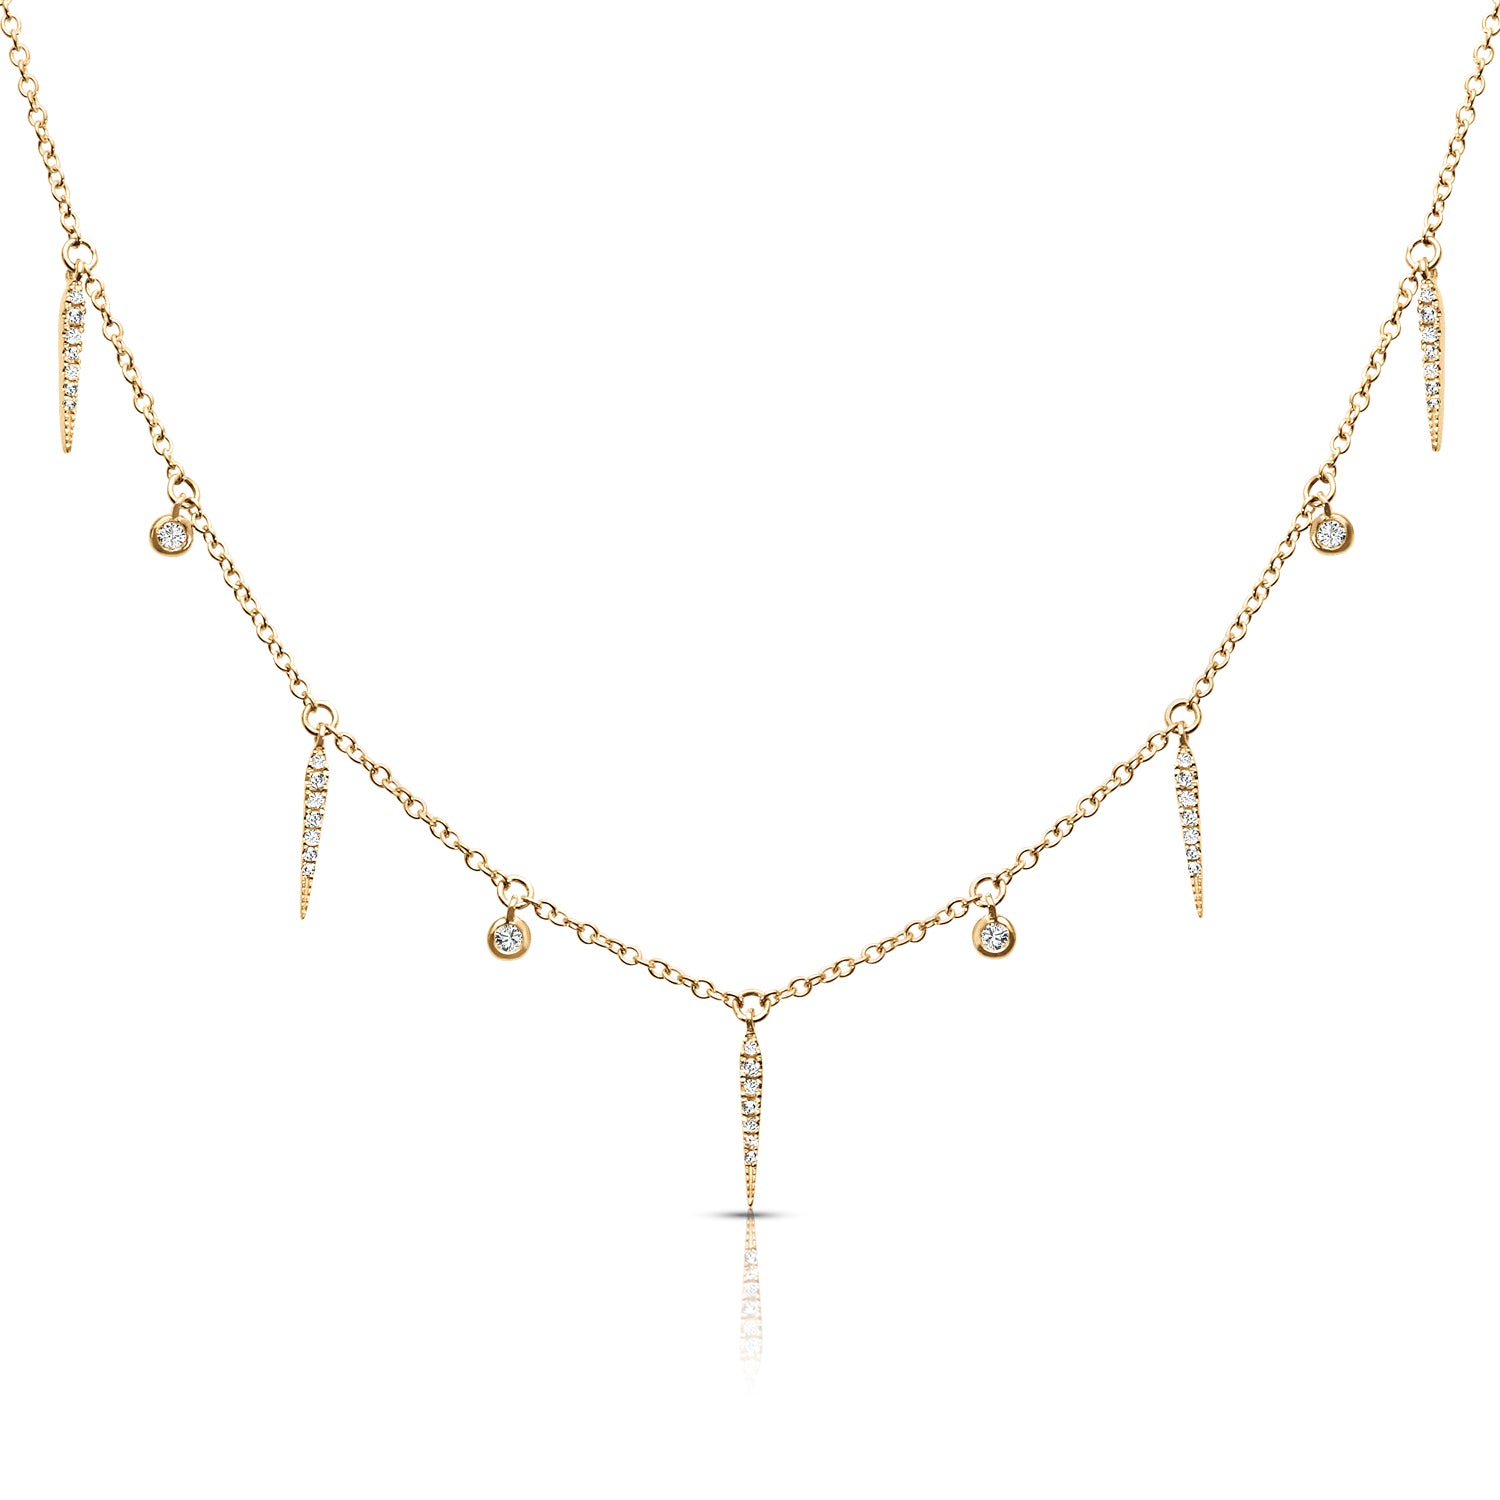 Fashion Diamond Choker With 0.16 ctw Diamond Chain Necklace-in 14K/18K White, Yellow, Rose Gold and Platinum - Christmas Jewelry Gift -VIRABYANI